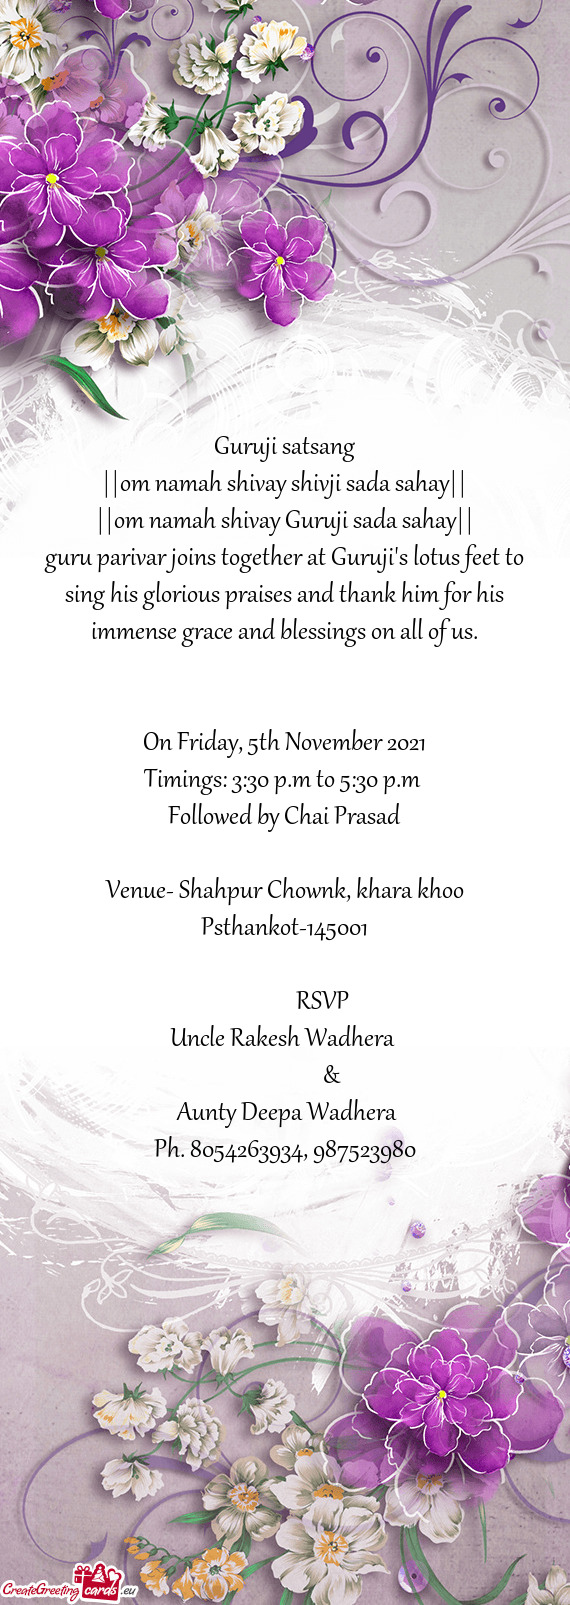 Guru parivar joins together at Guruji